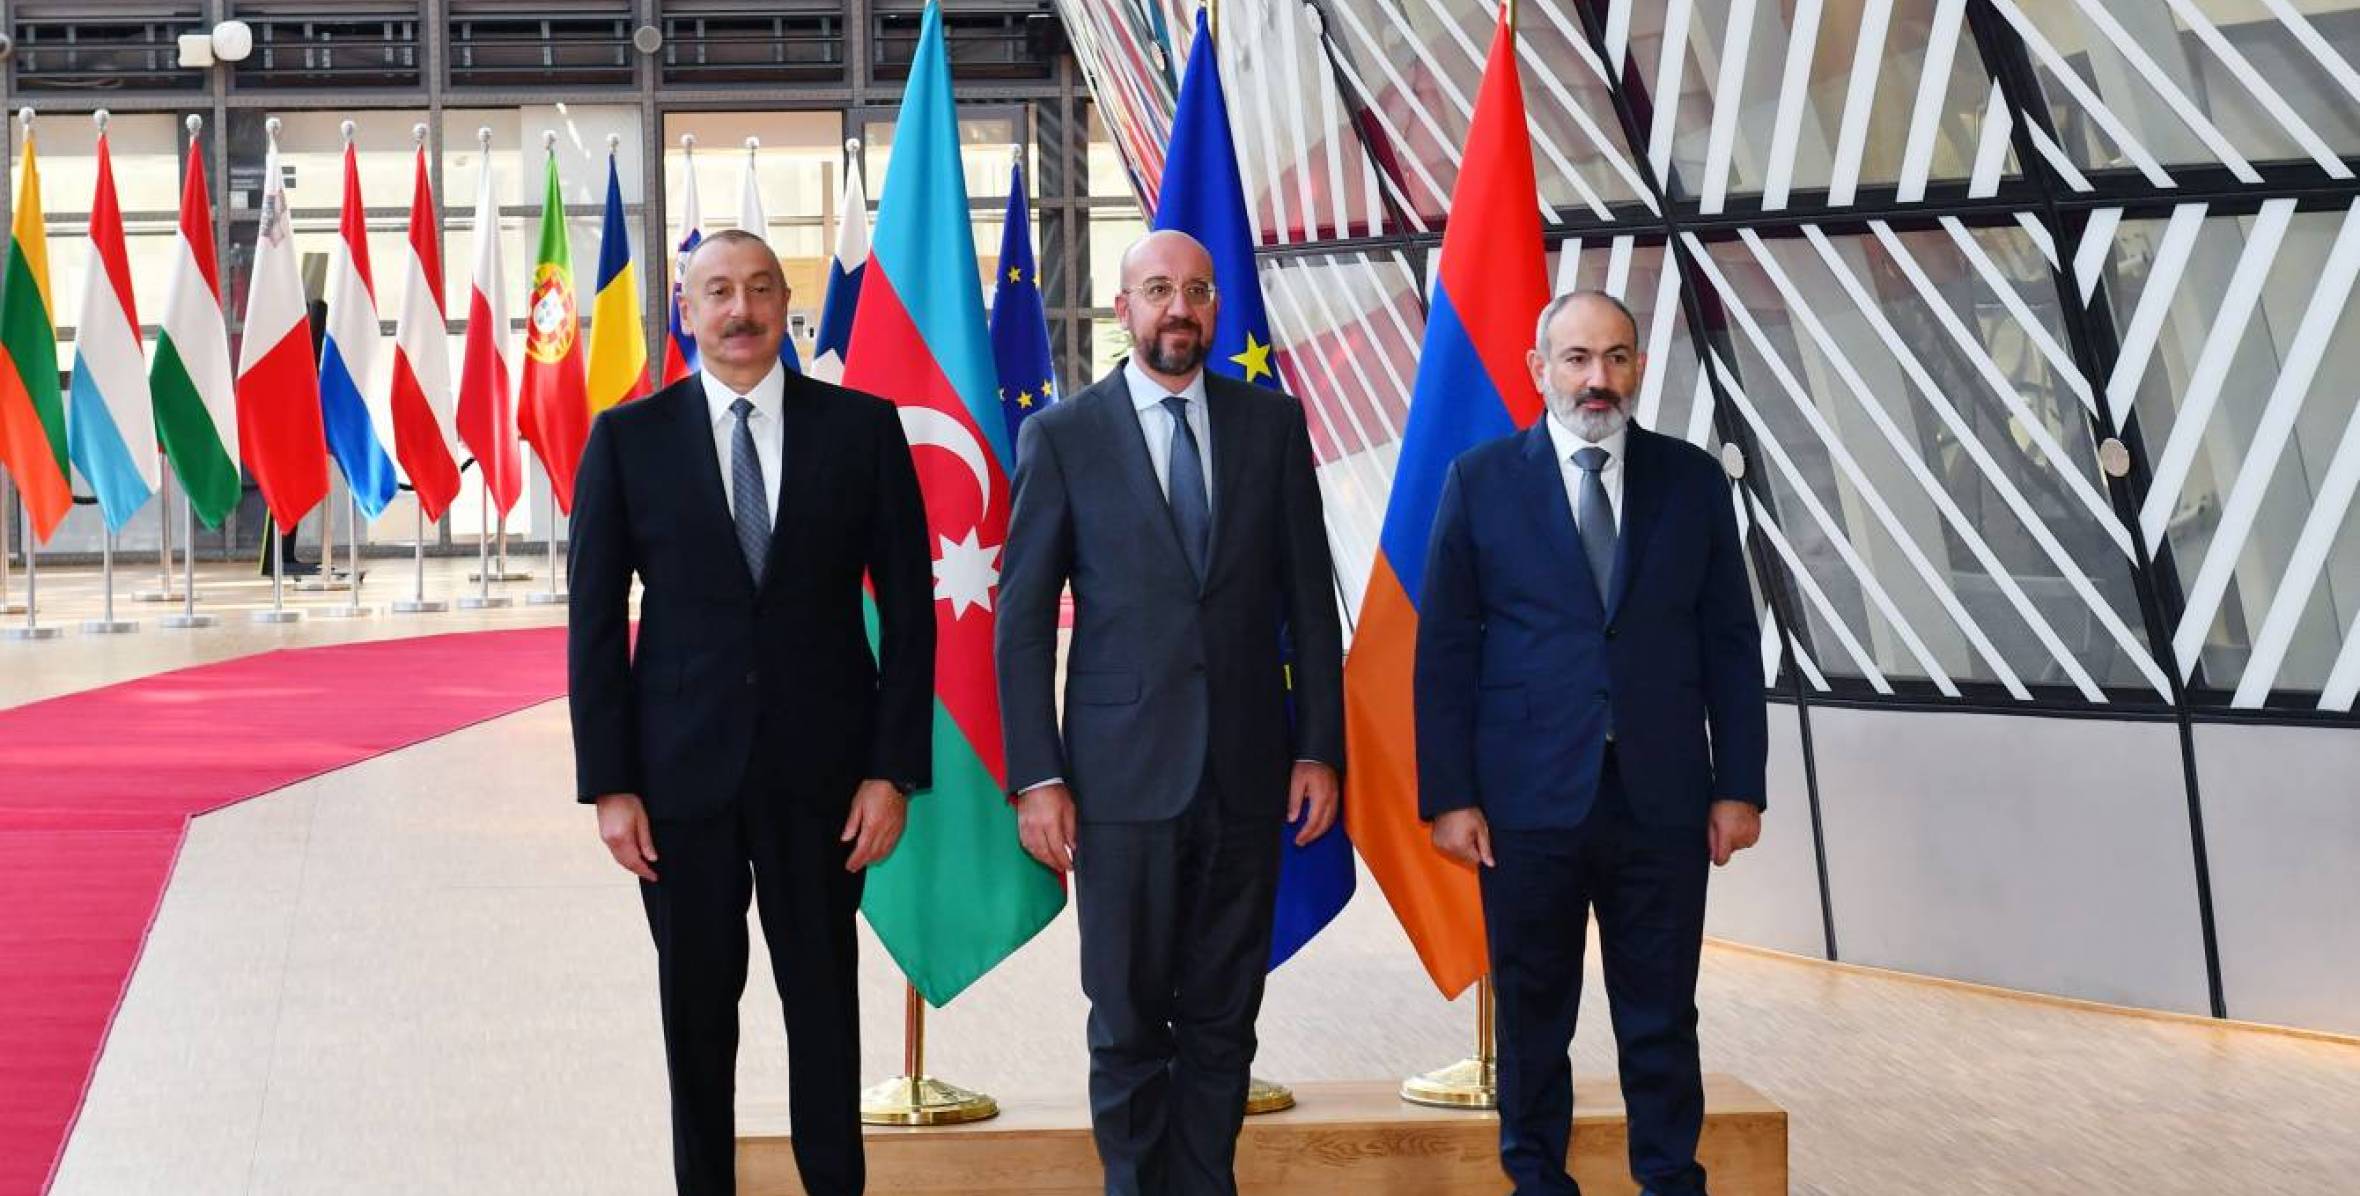 Visit of Ilham Aliyev to Brussels